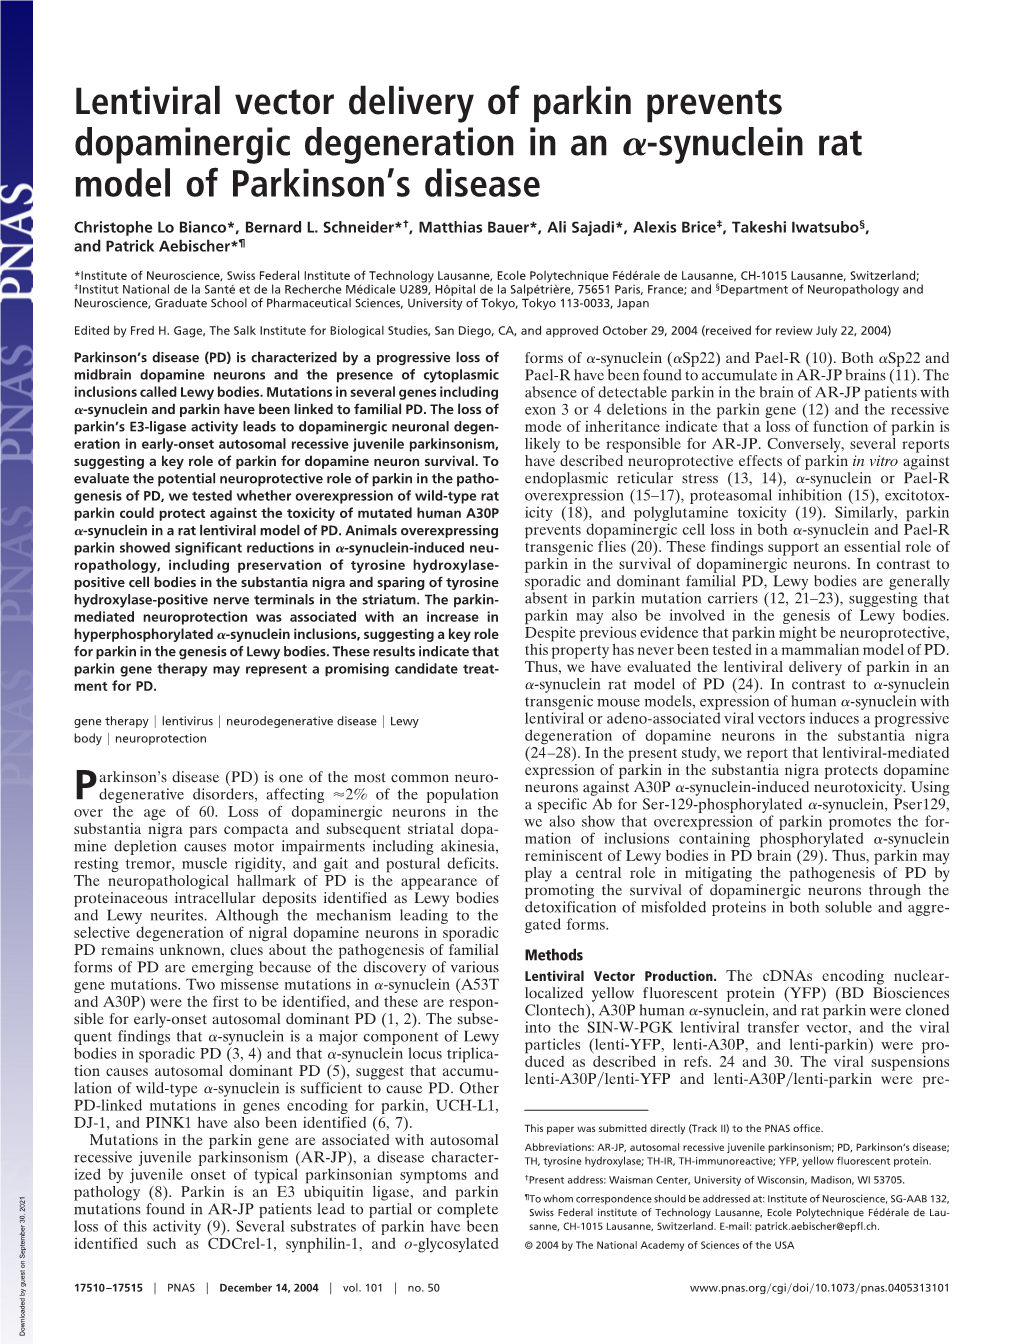 Synuclein Rat Model of Parkinson's Disease